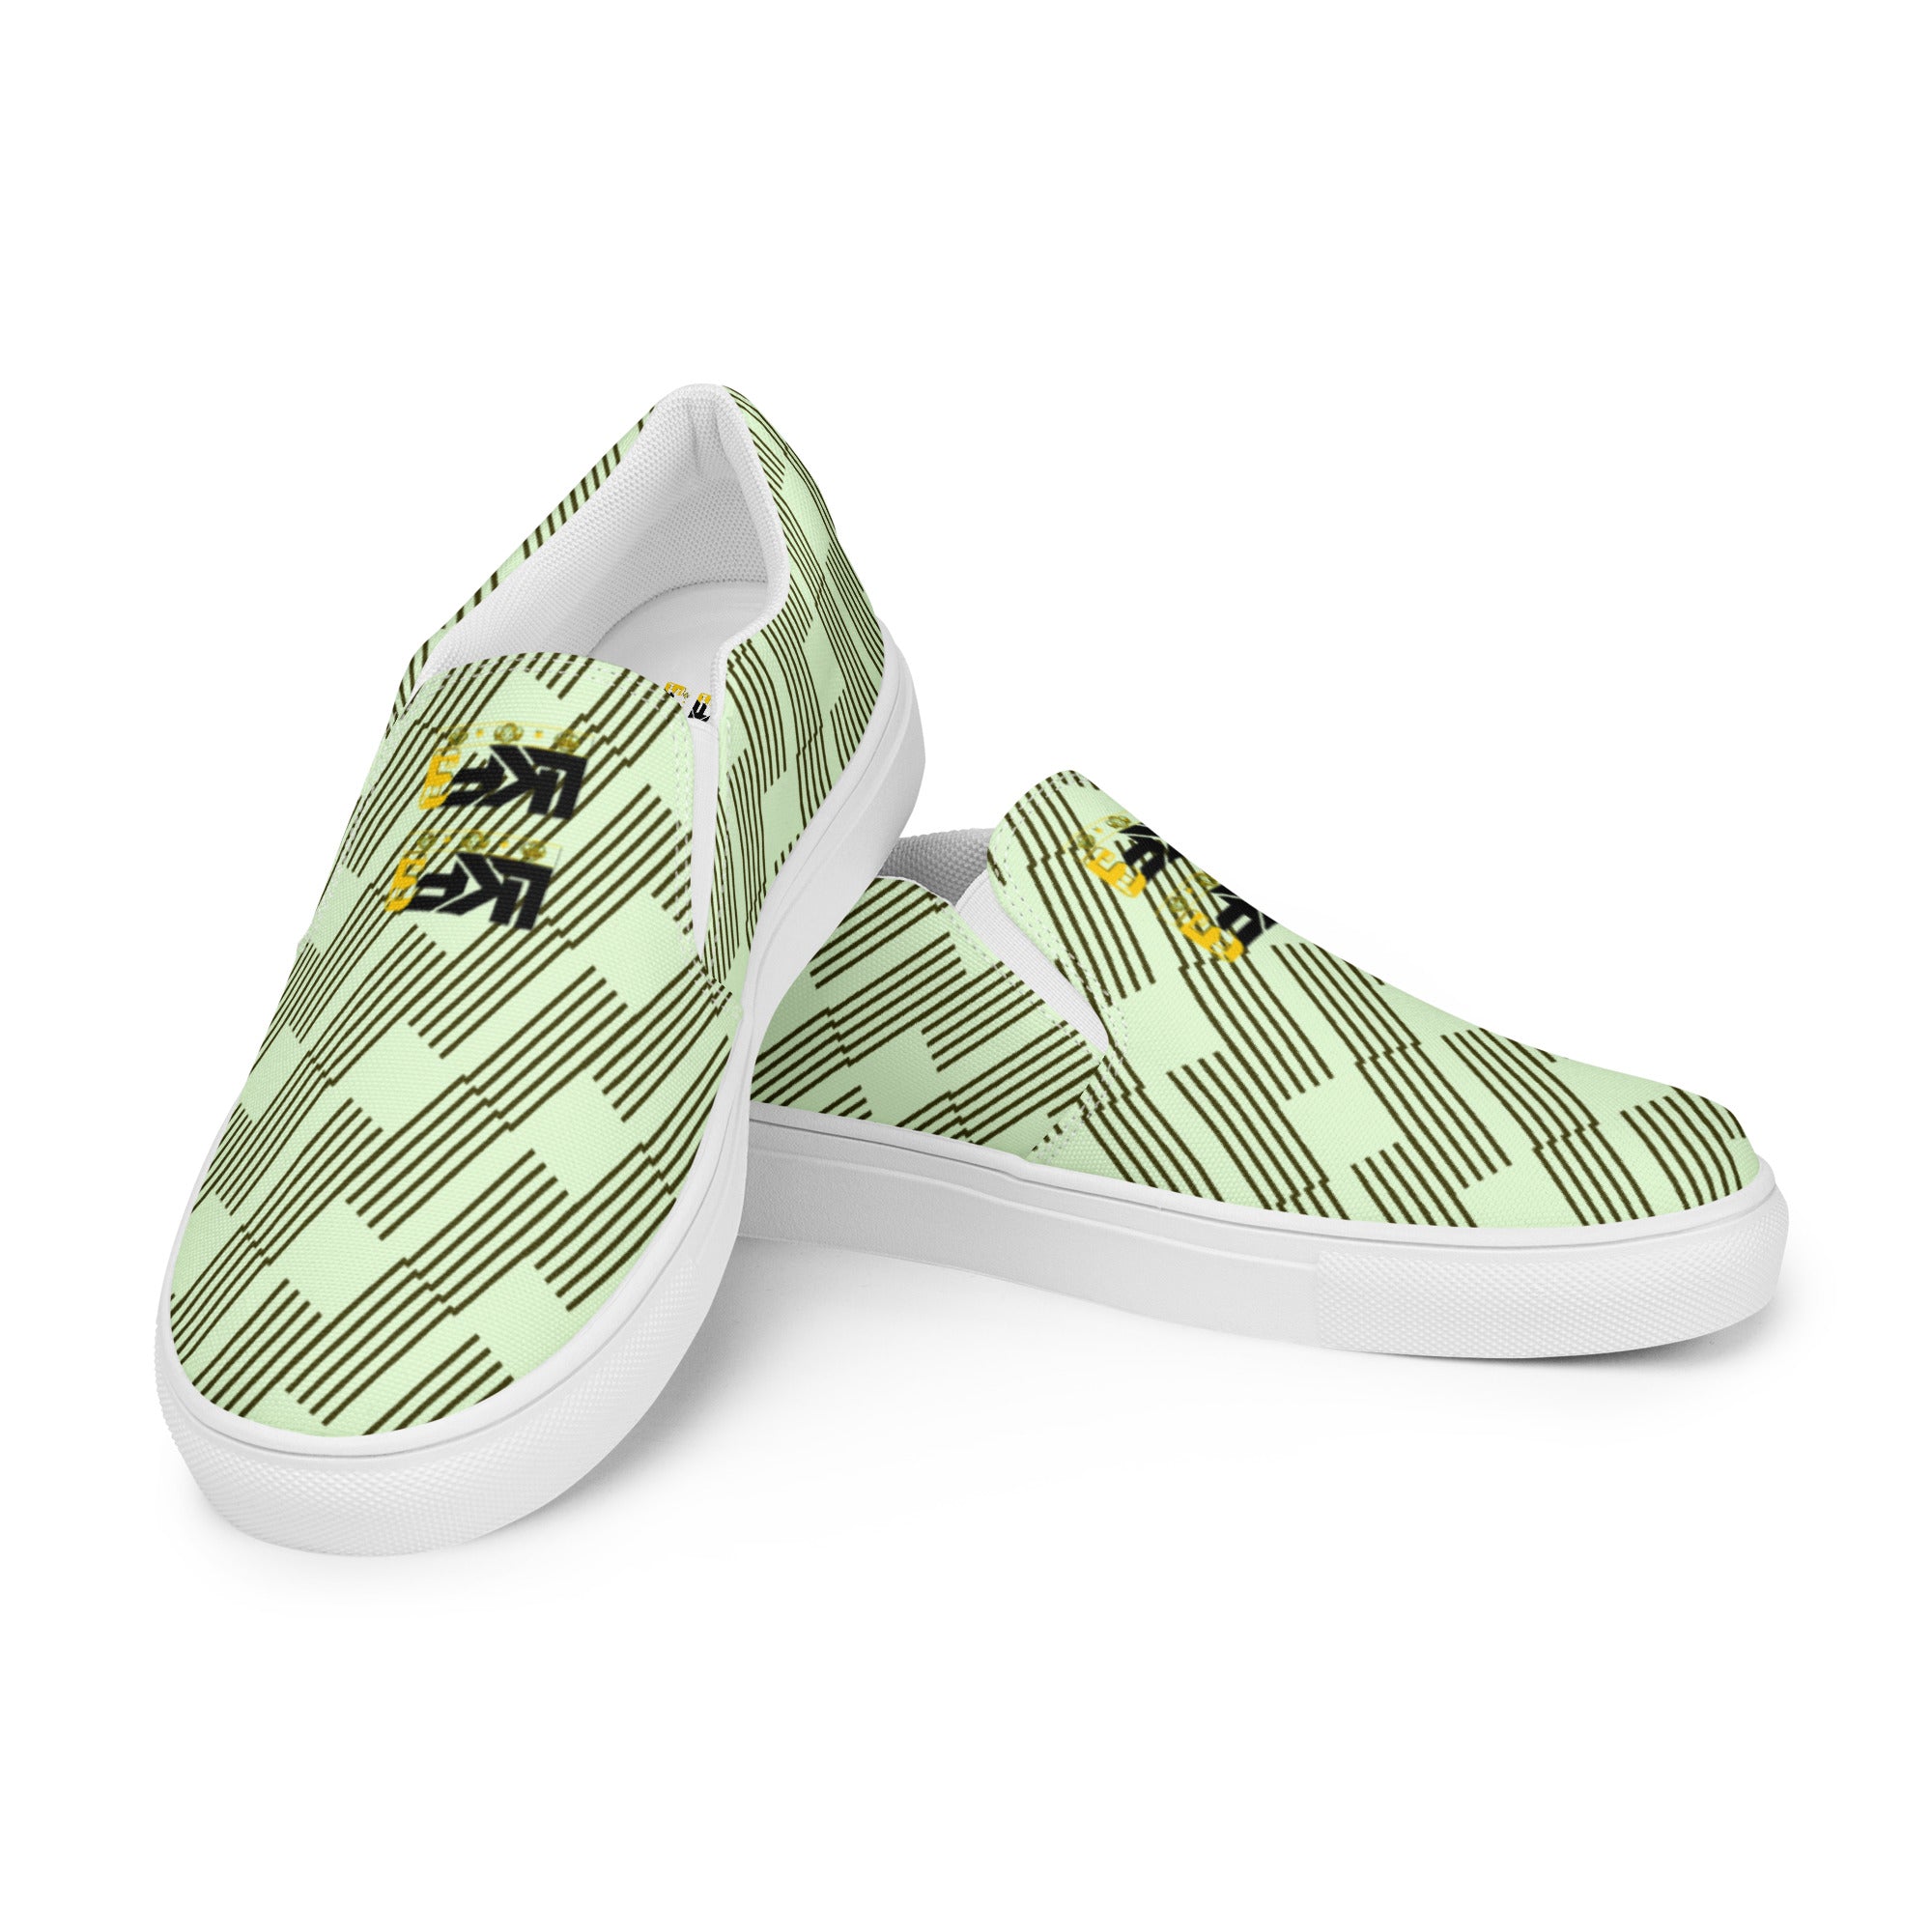 Men's slip-on green lkf9 shoes